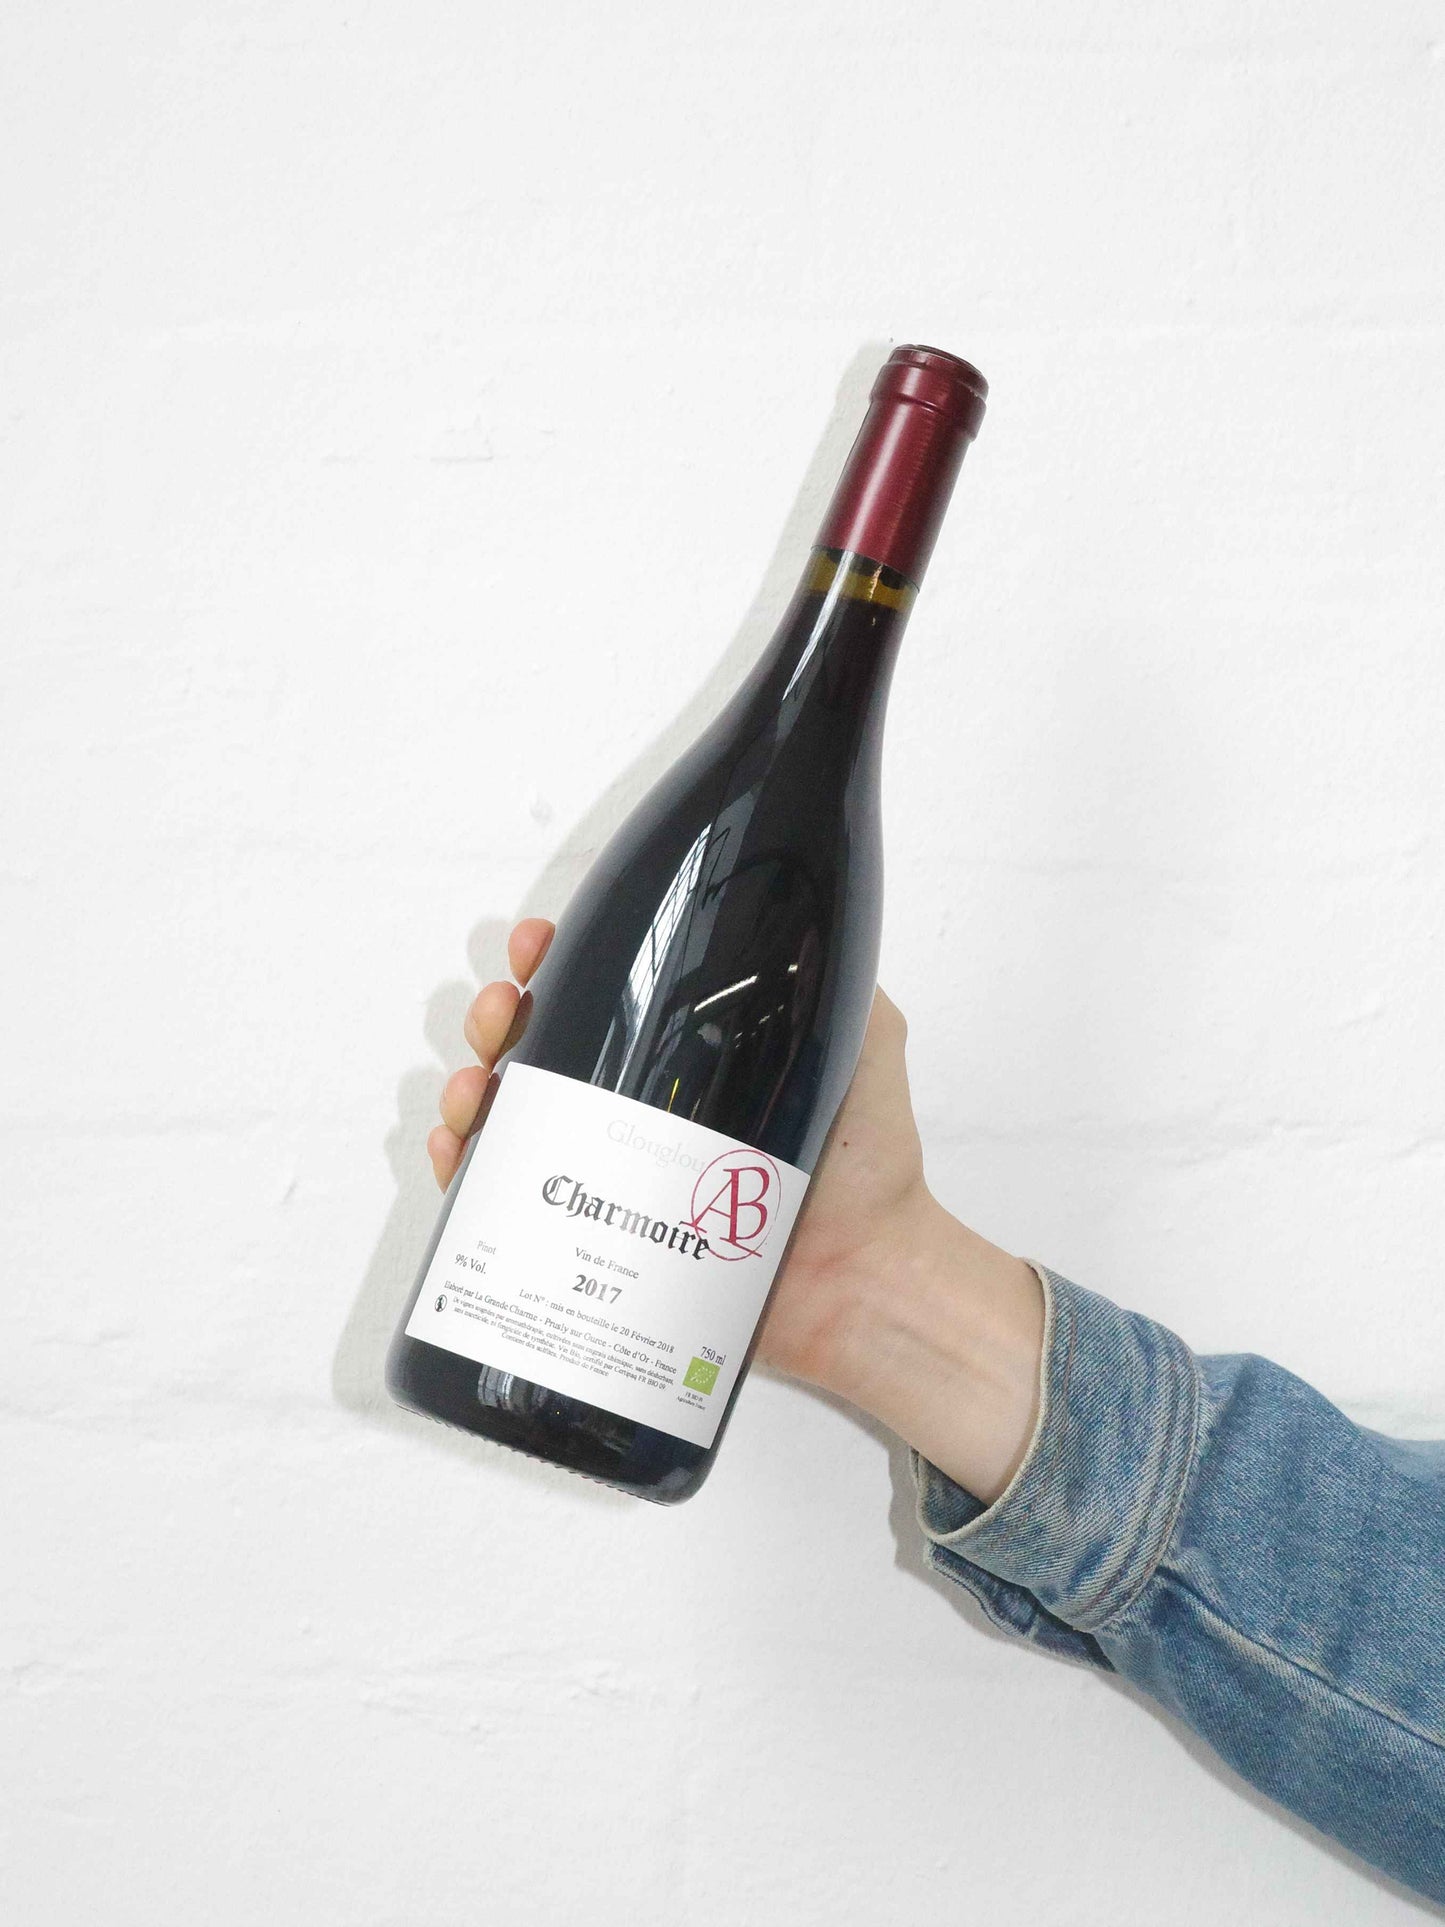 Pinot Noir, DF Charmoire Glouglou, 2017 | Chatillionais, Burgundy